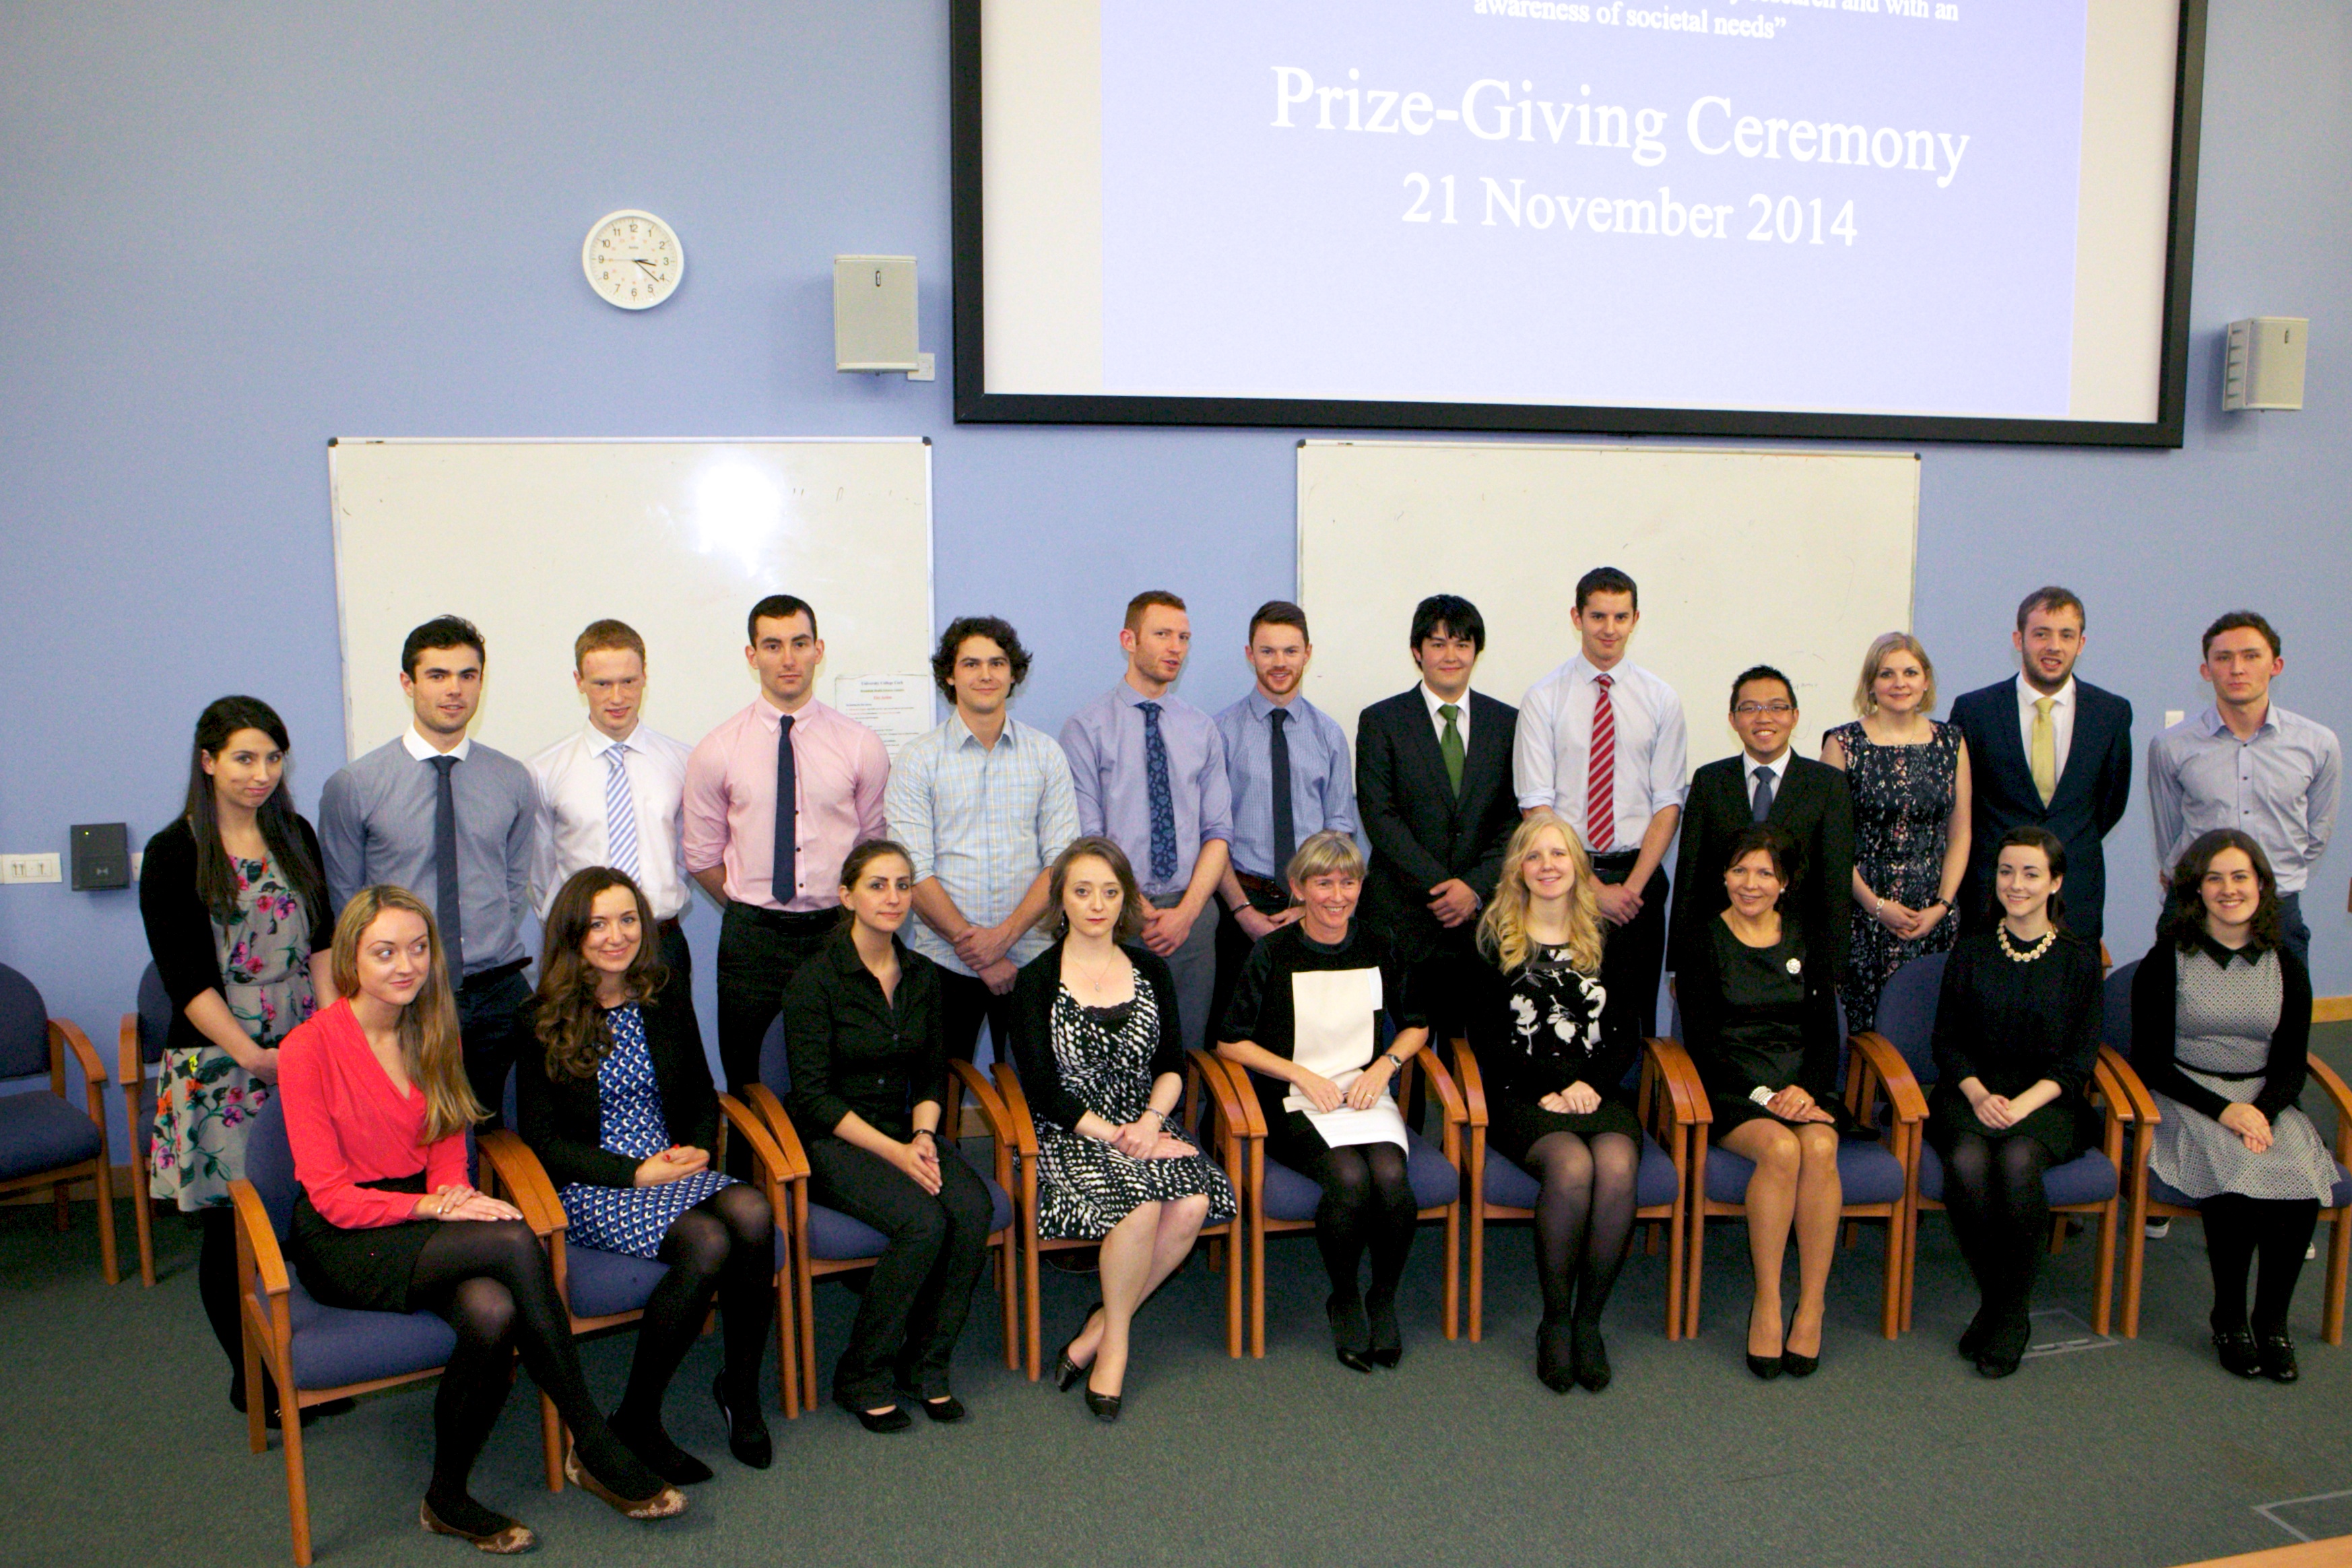 School of Medicine Prize-Giving Ceremony 2014